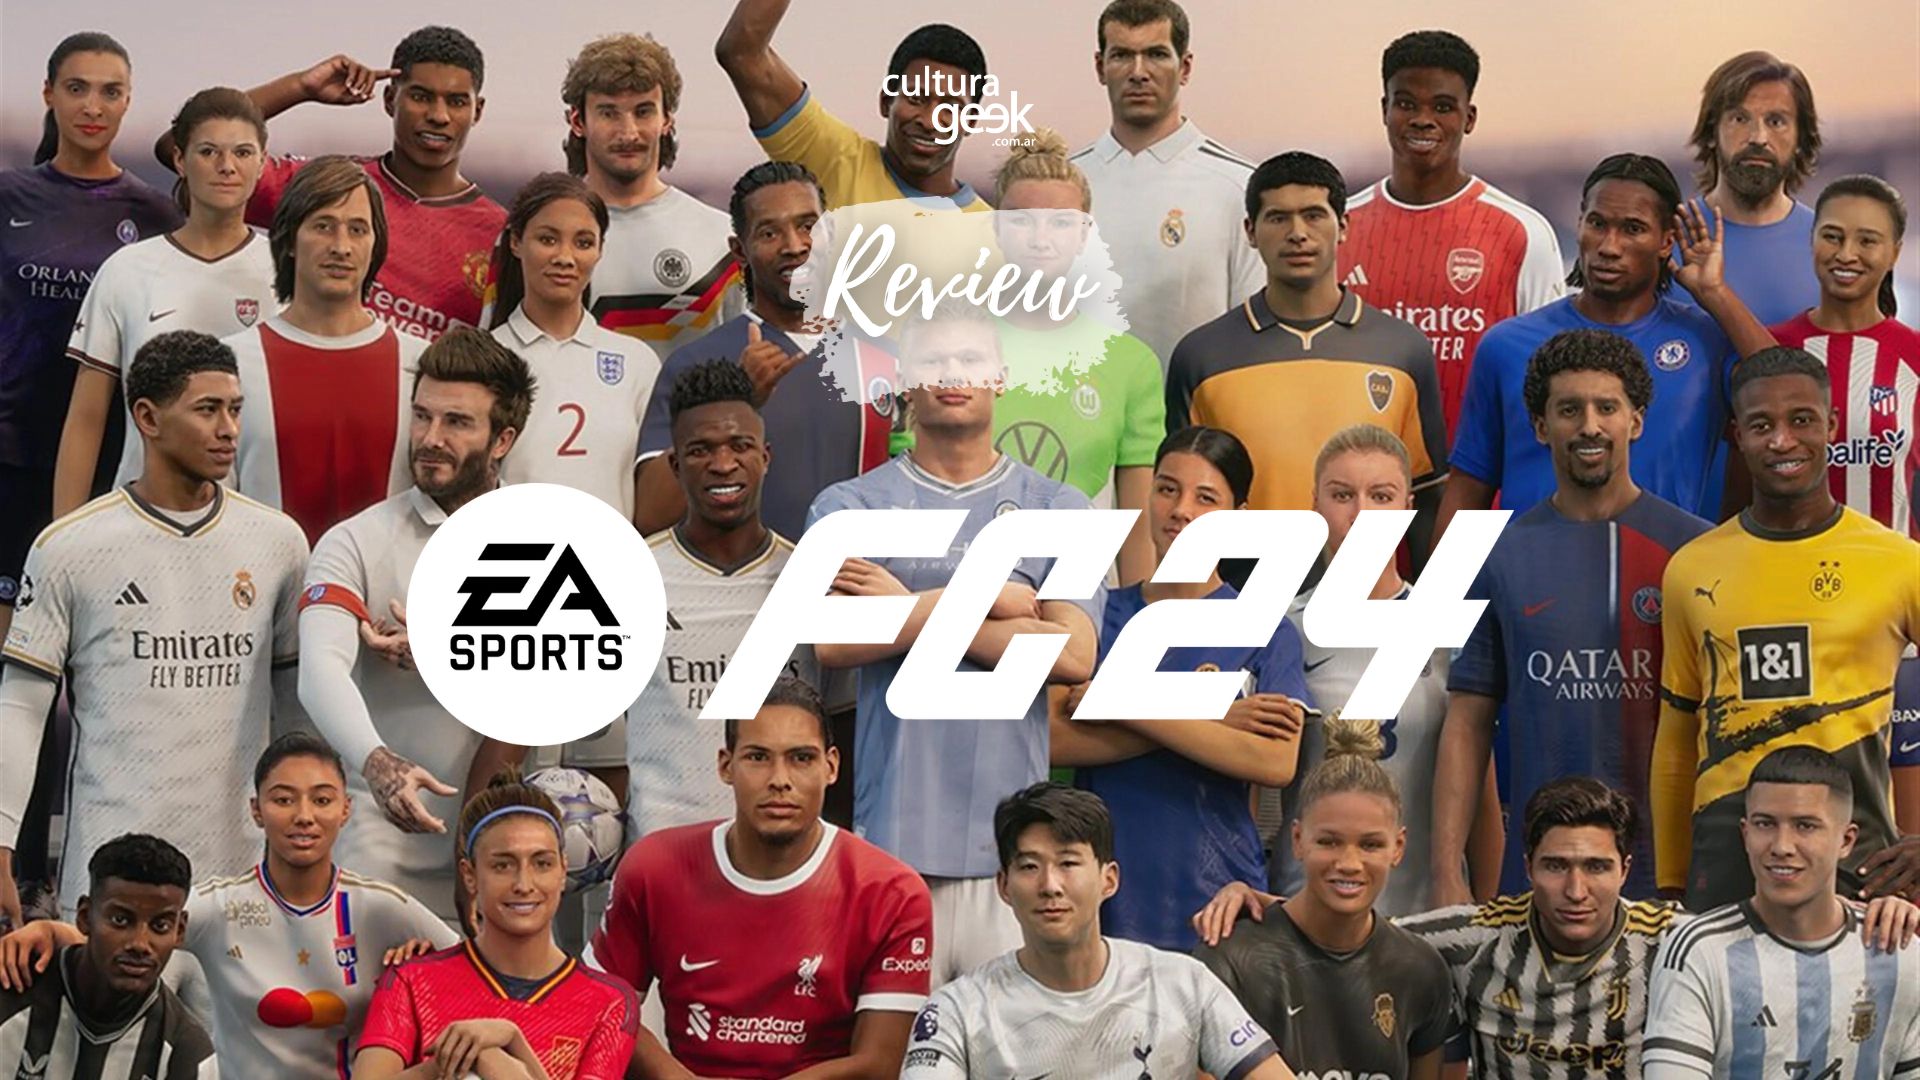 EA Sports FC 24: ¿Vale la pena? 